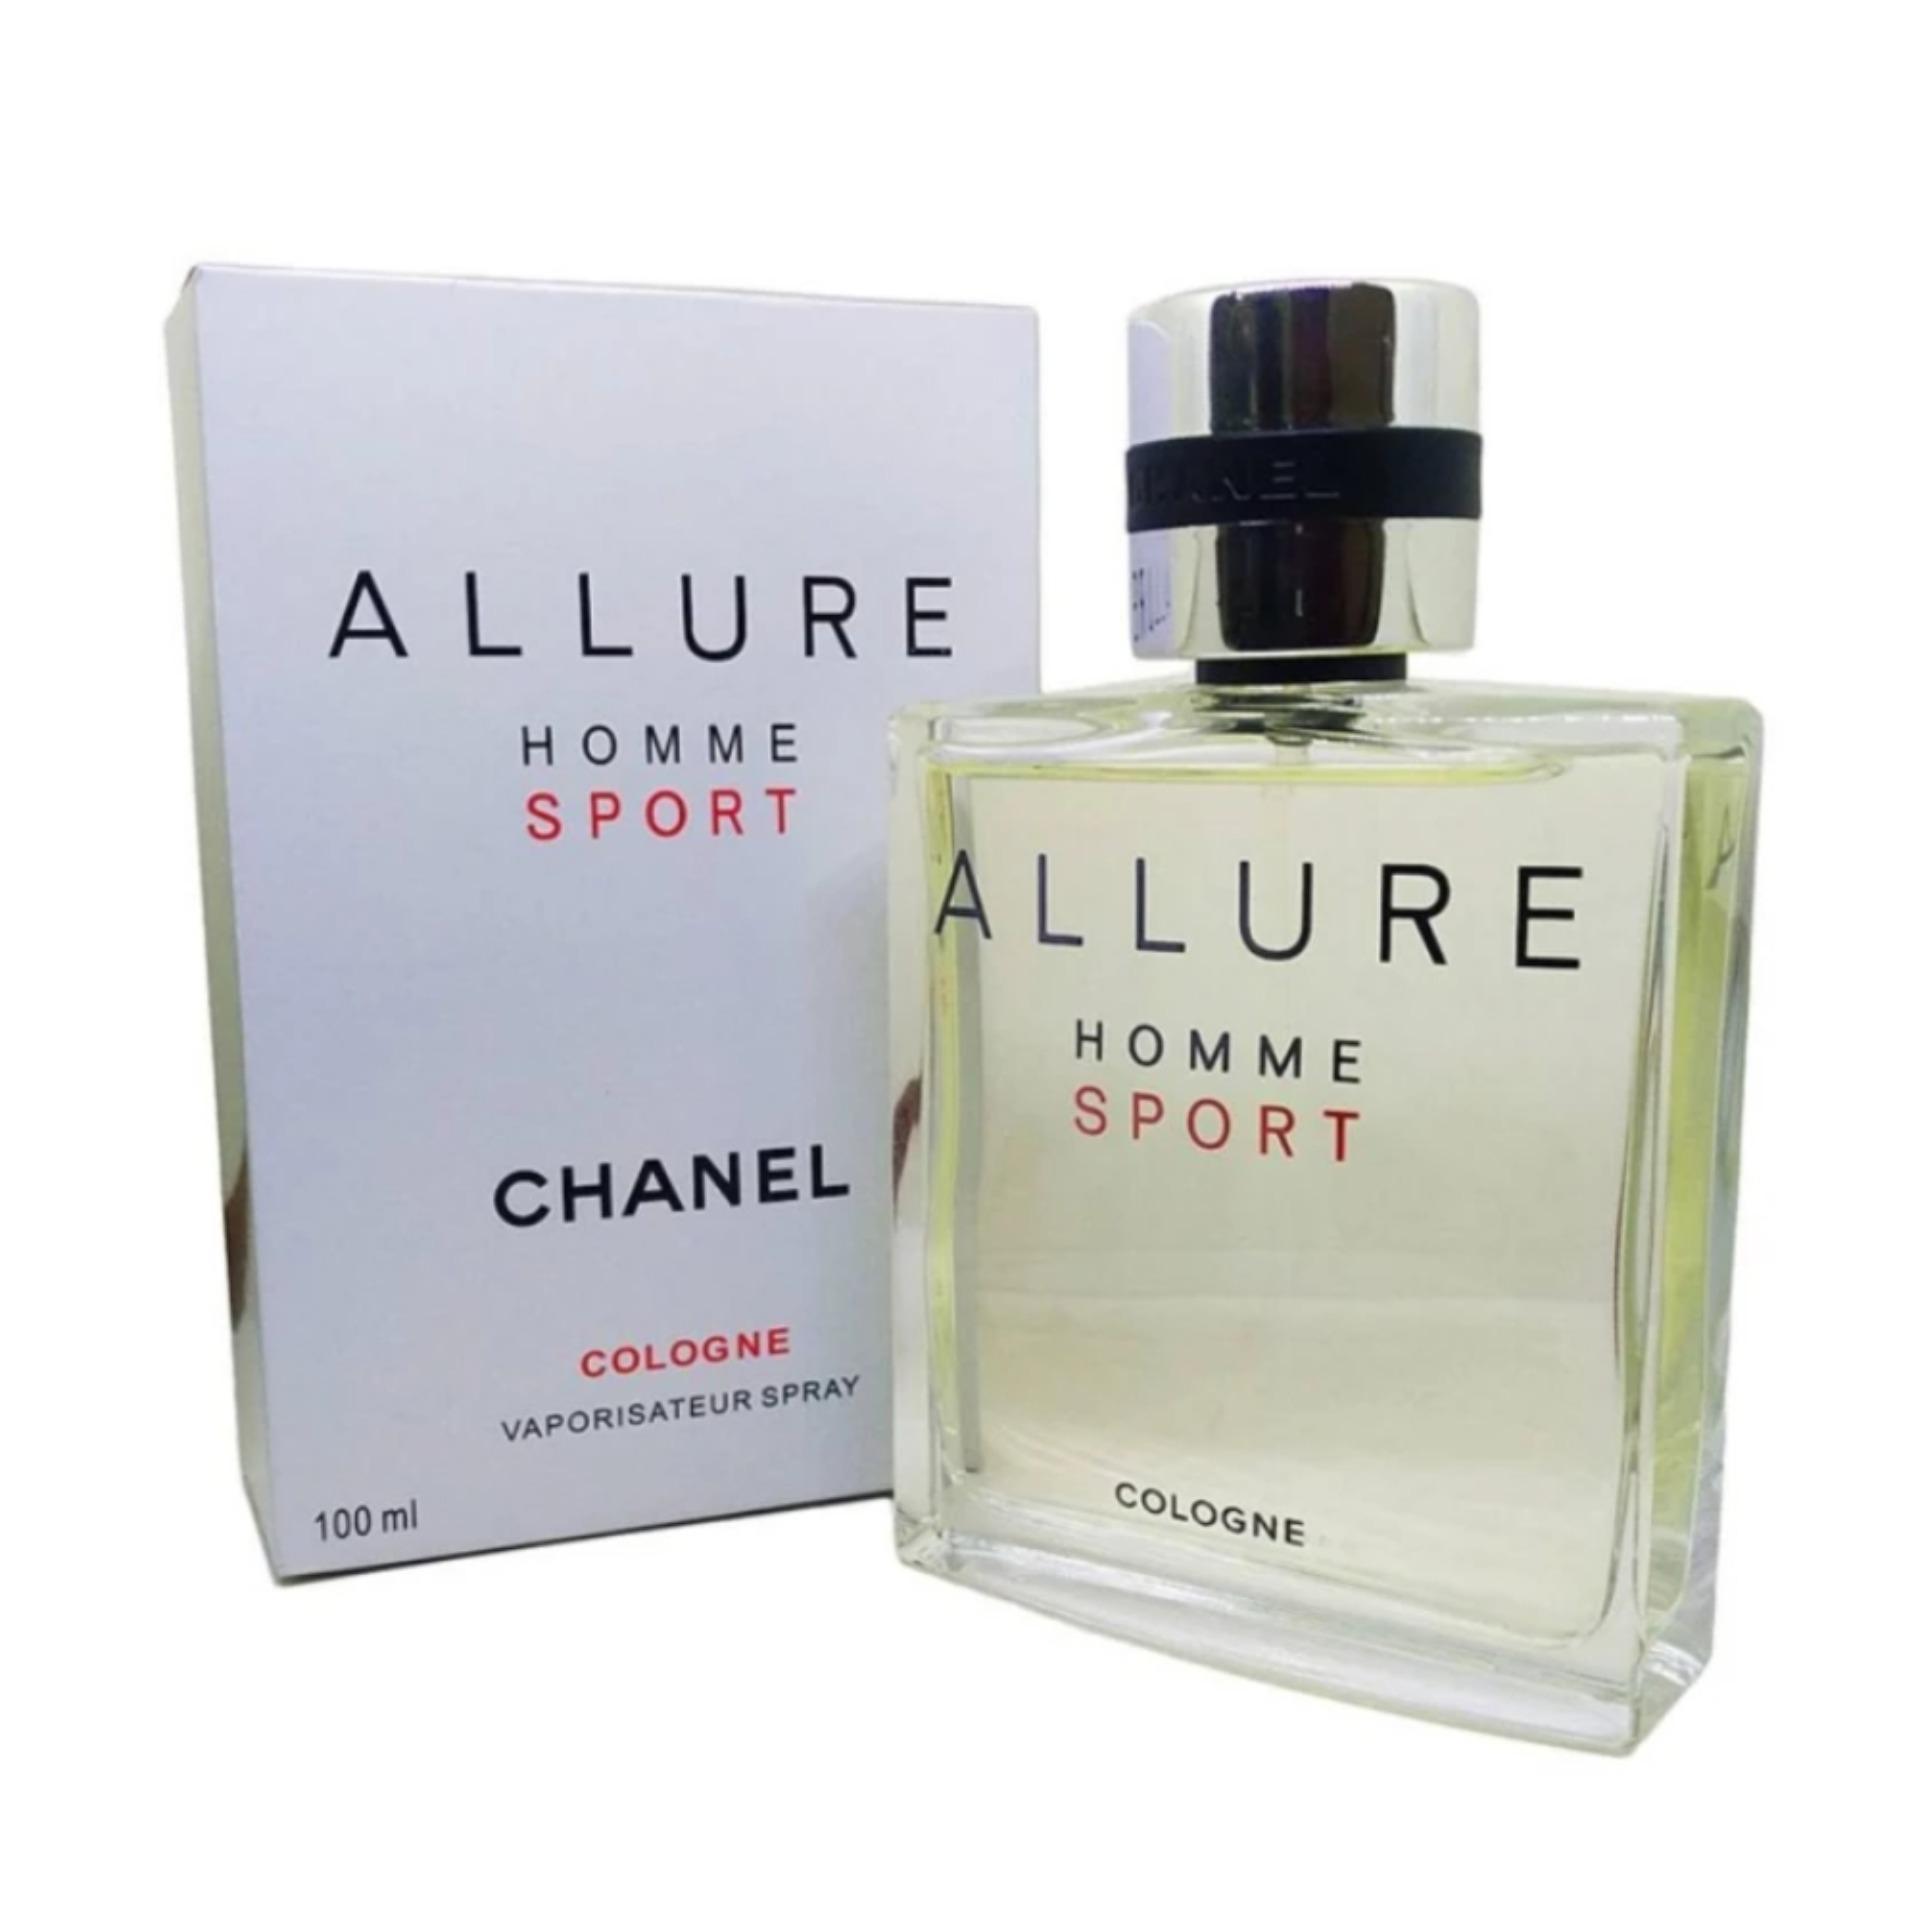 Allure sport cologne. Chanel Allure homme Sport 100ml. Chanel Allure homme Sport Cologne 100 ml. Аллюр хом Шанель 100 мл. Chanel Allure homme Sport.